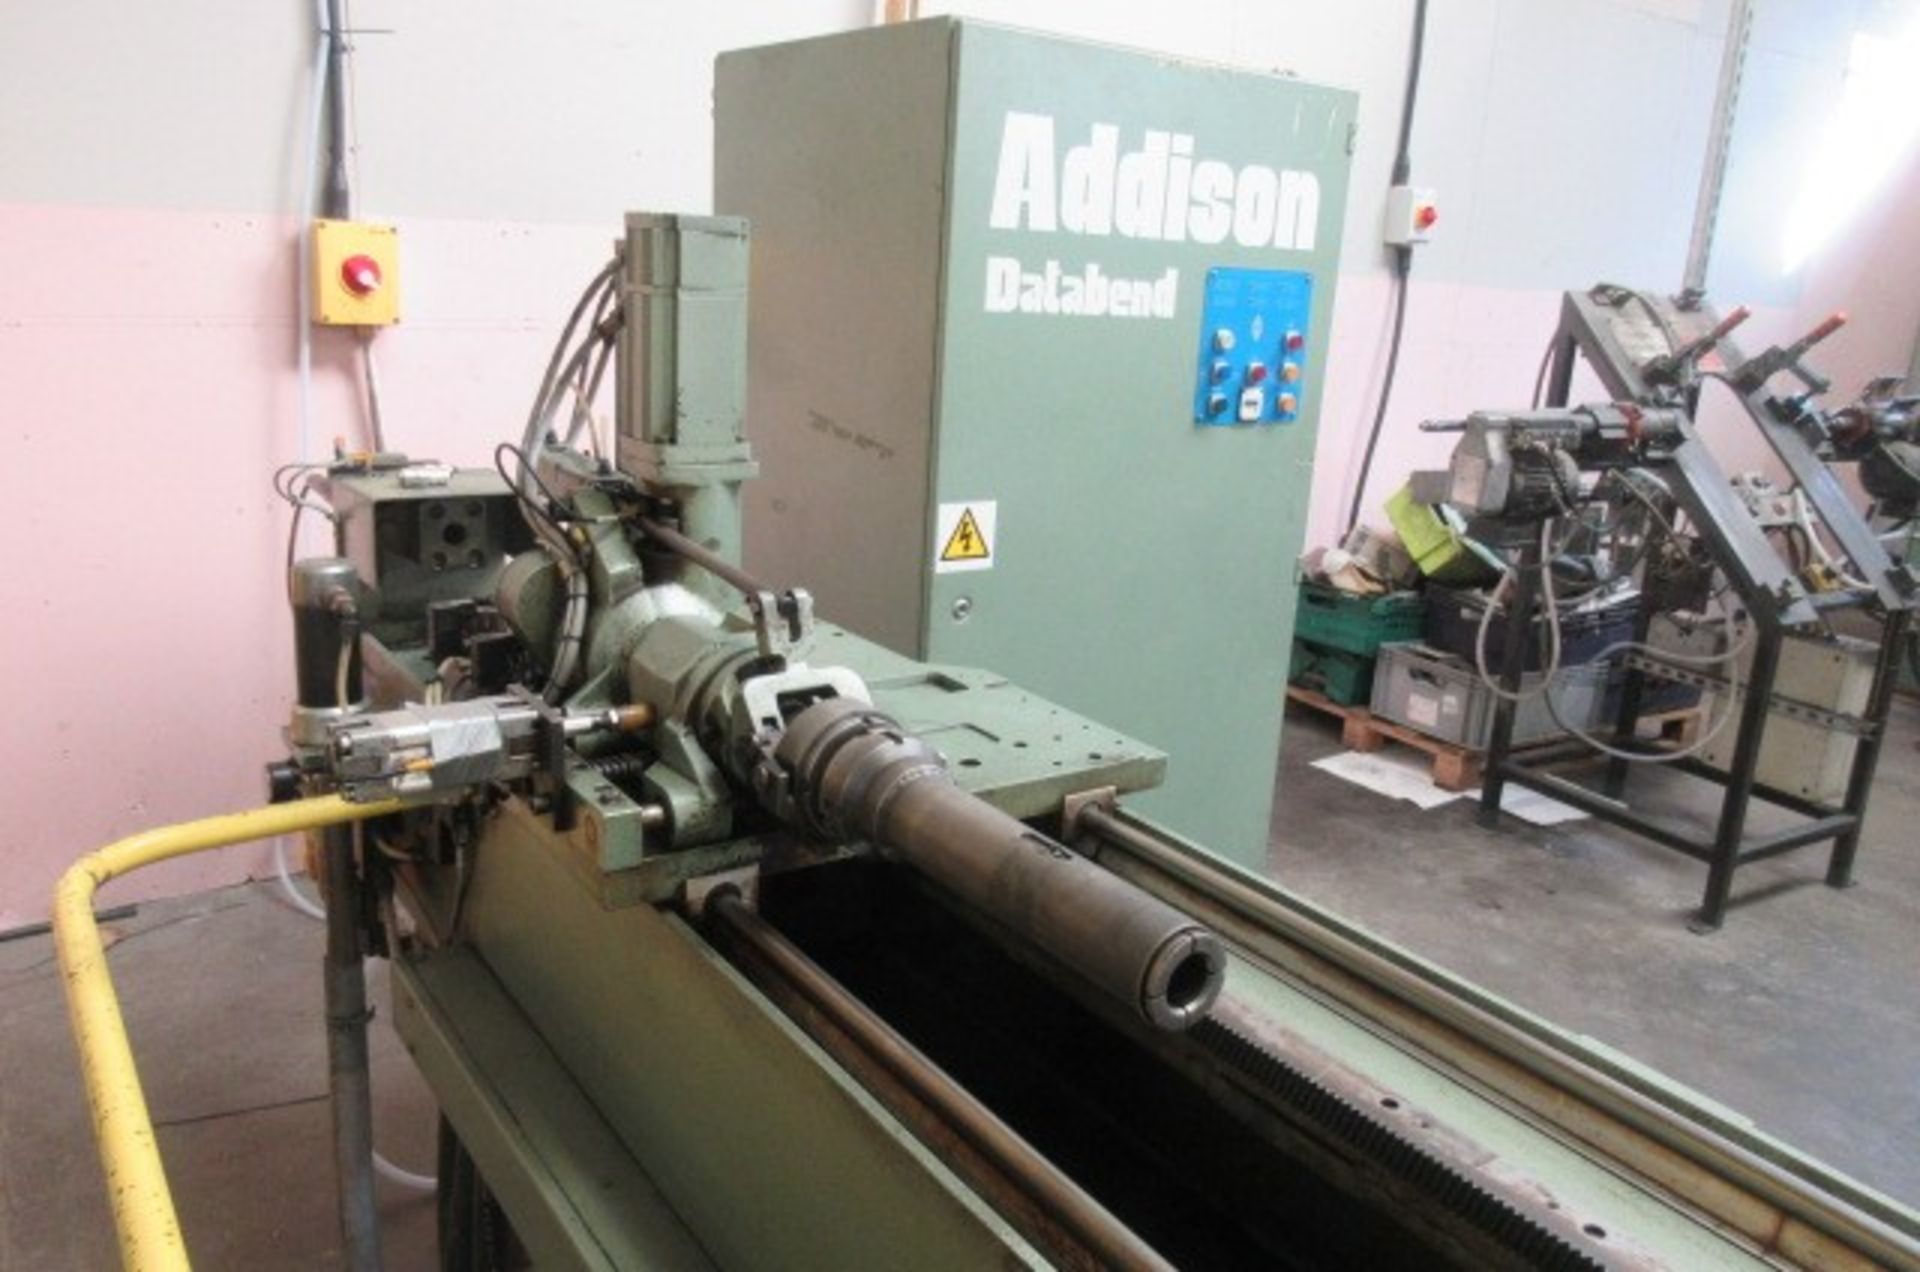 Addison Databend 40mm CNC tube bending machine (1995). - Image 3 of 11